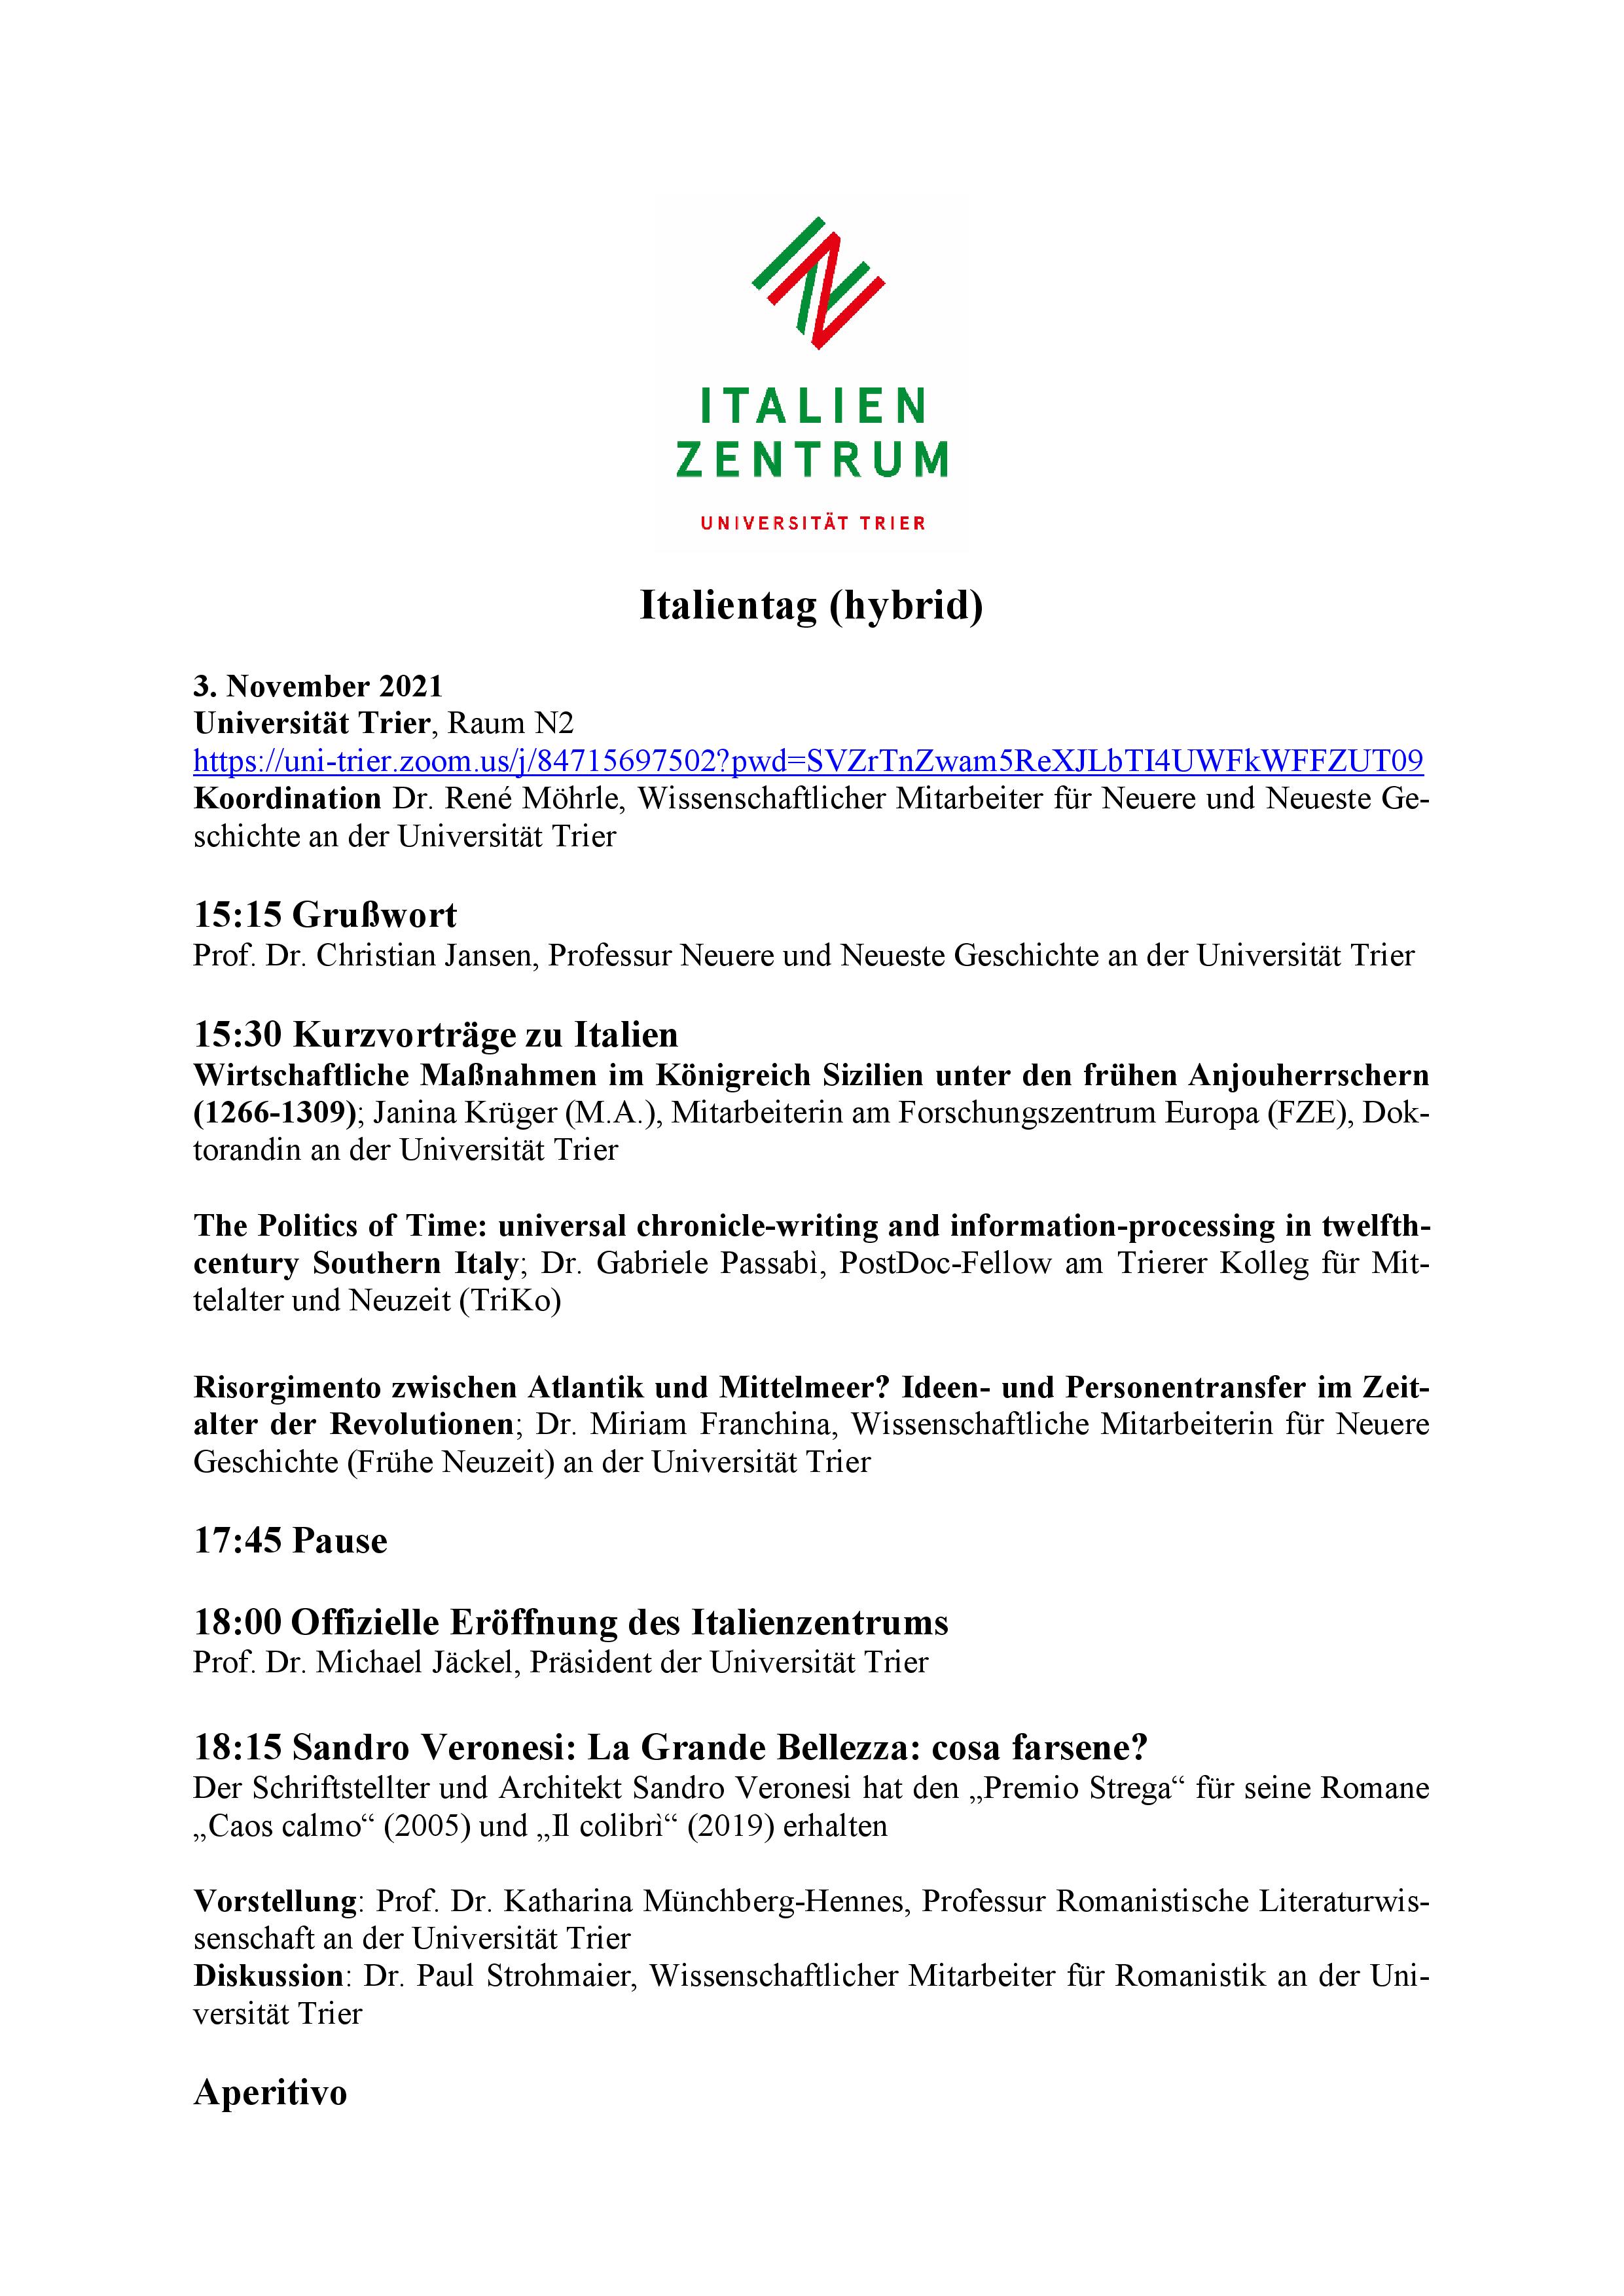 Italientag_Trier_Programm_3.11.2021-page-001